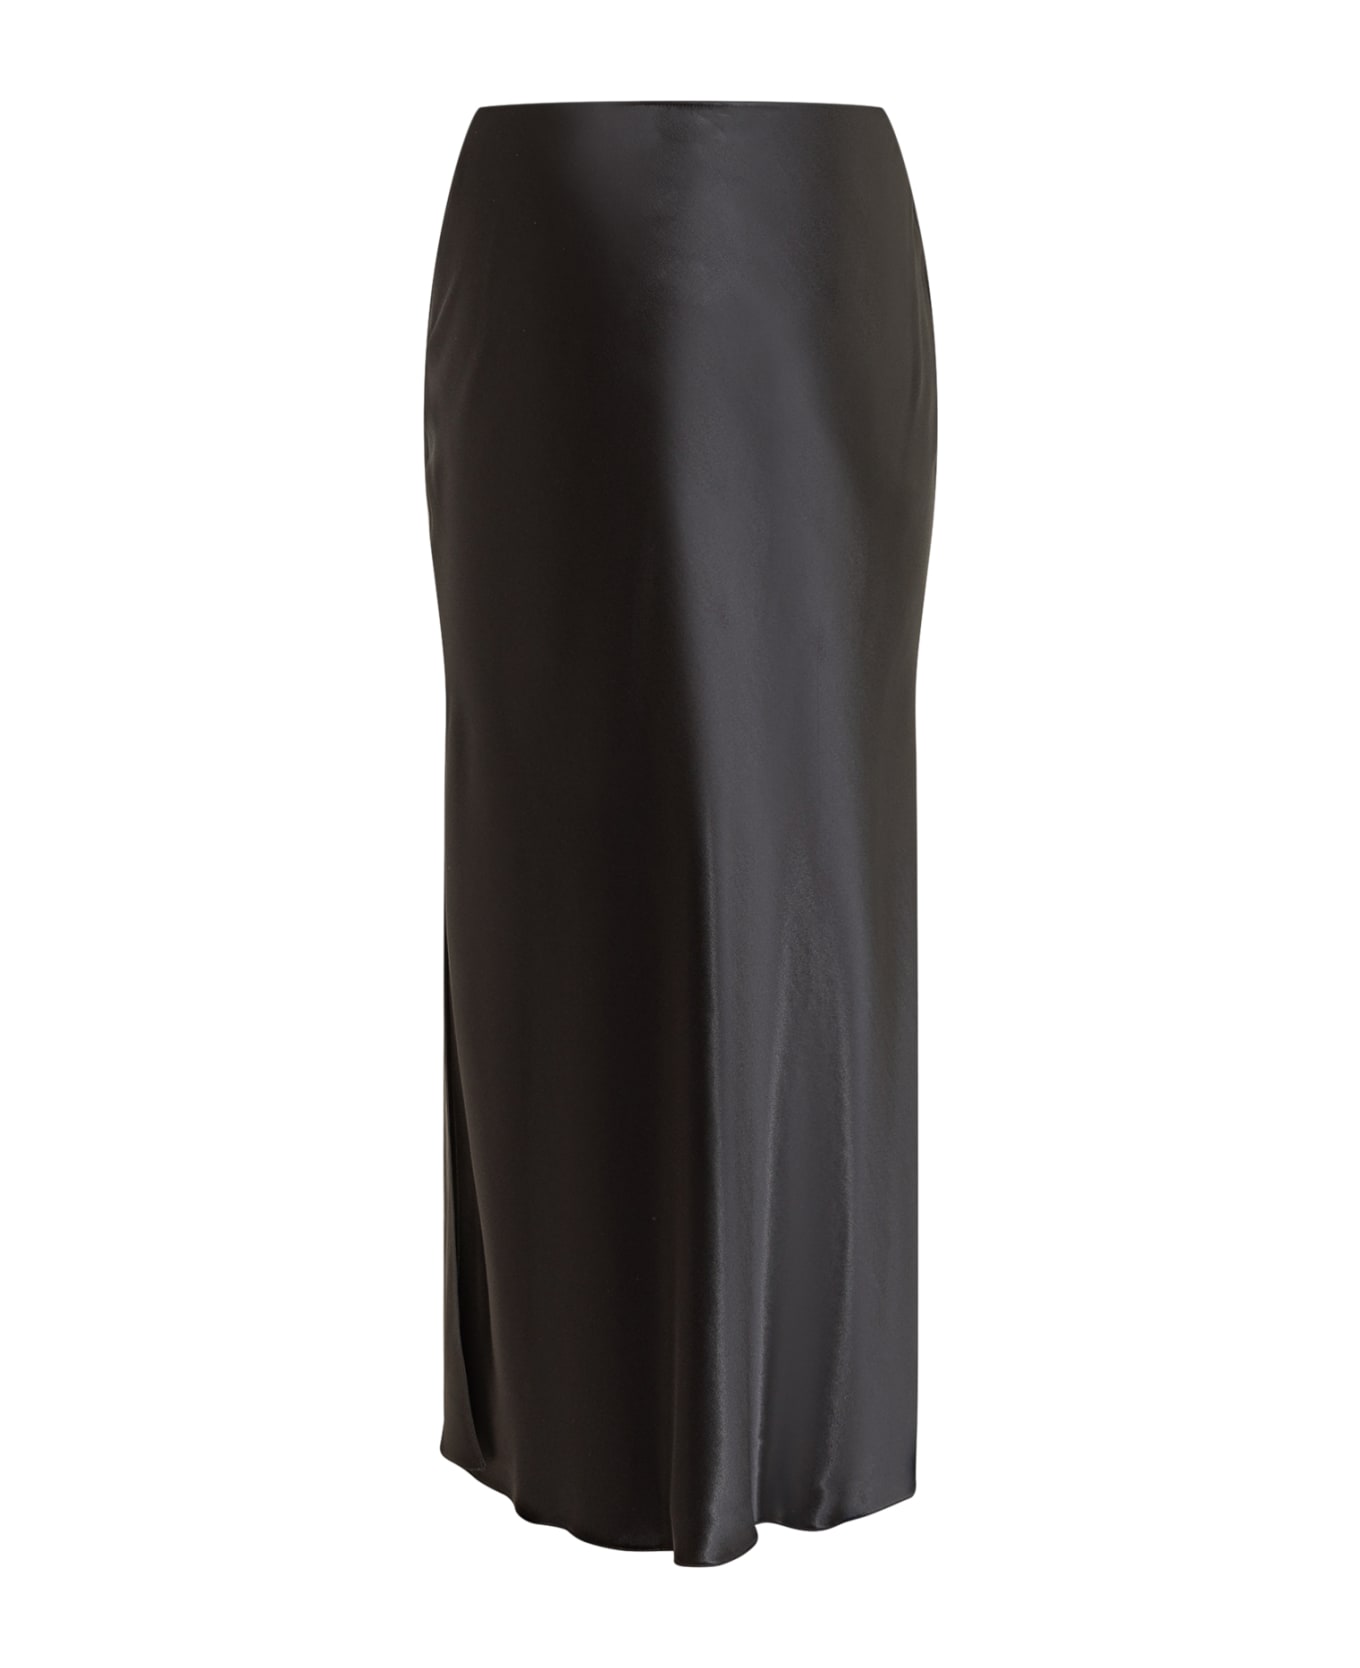 Ferragamo Satin Skirt Longuette - NERO/BIANCO スカート